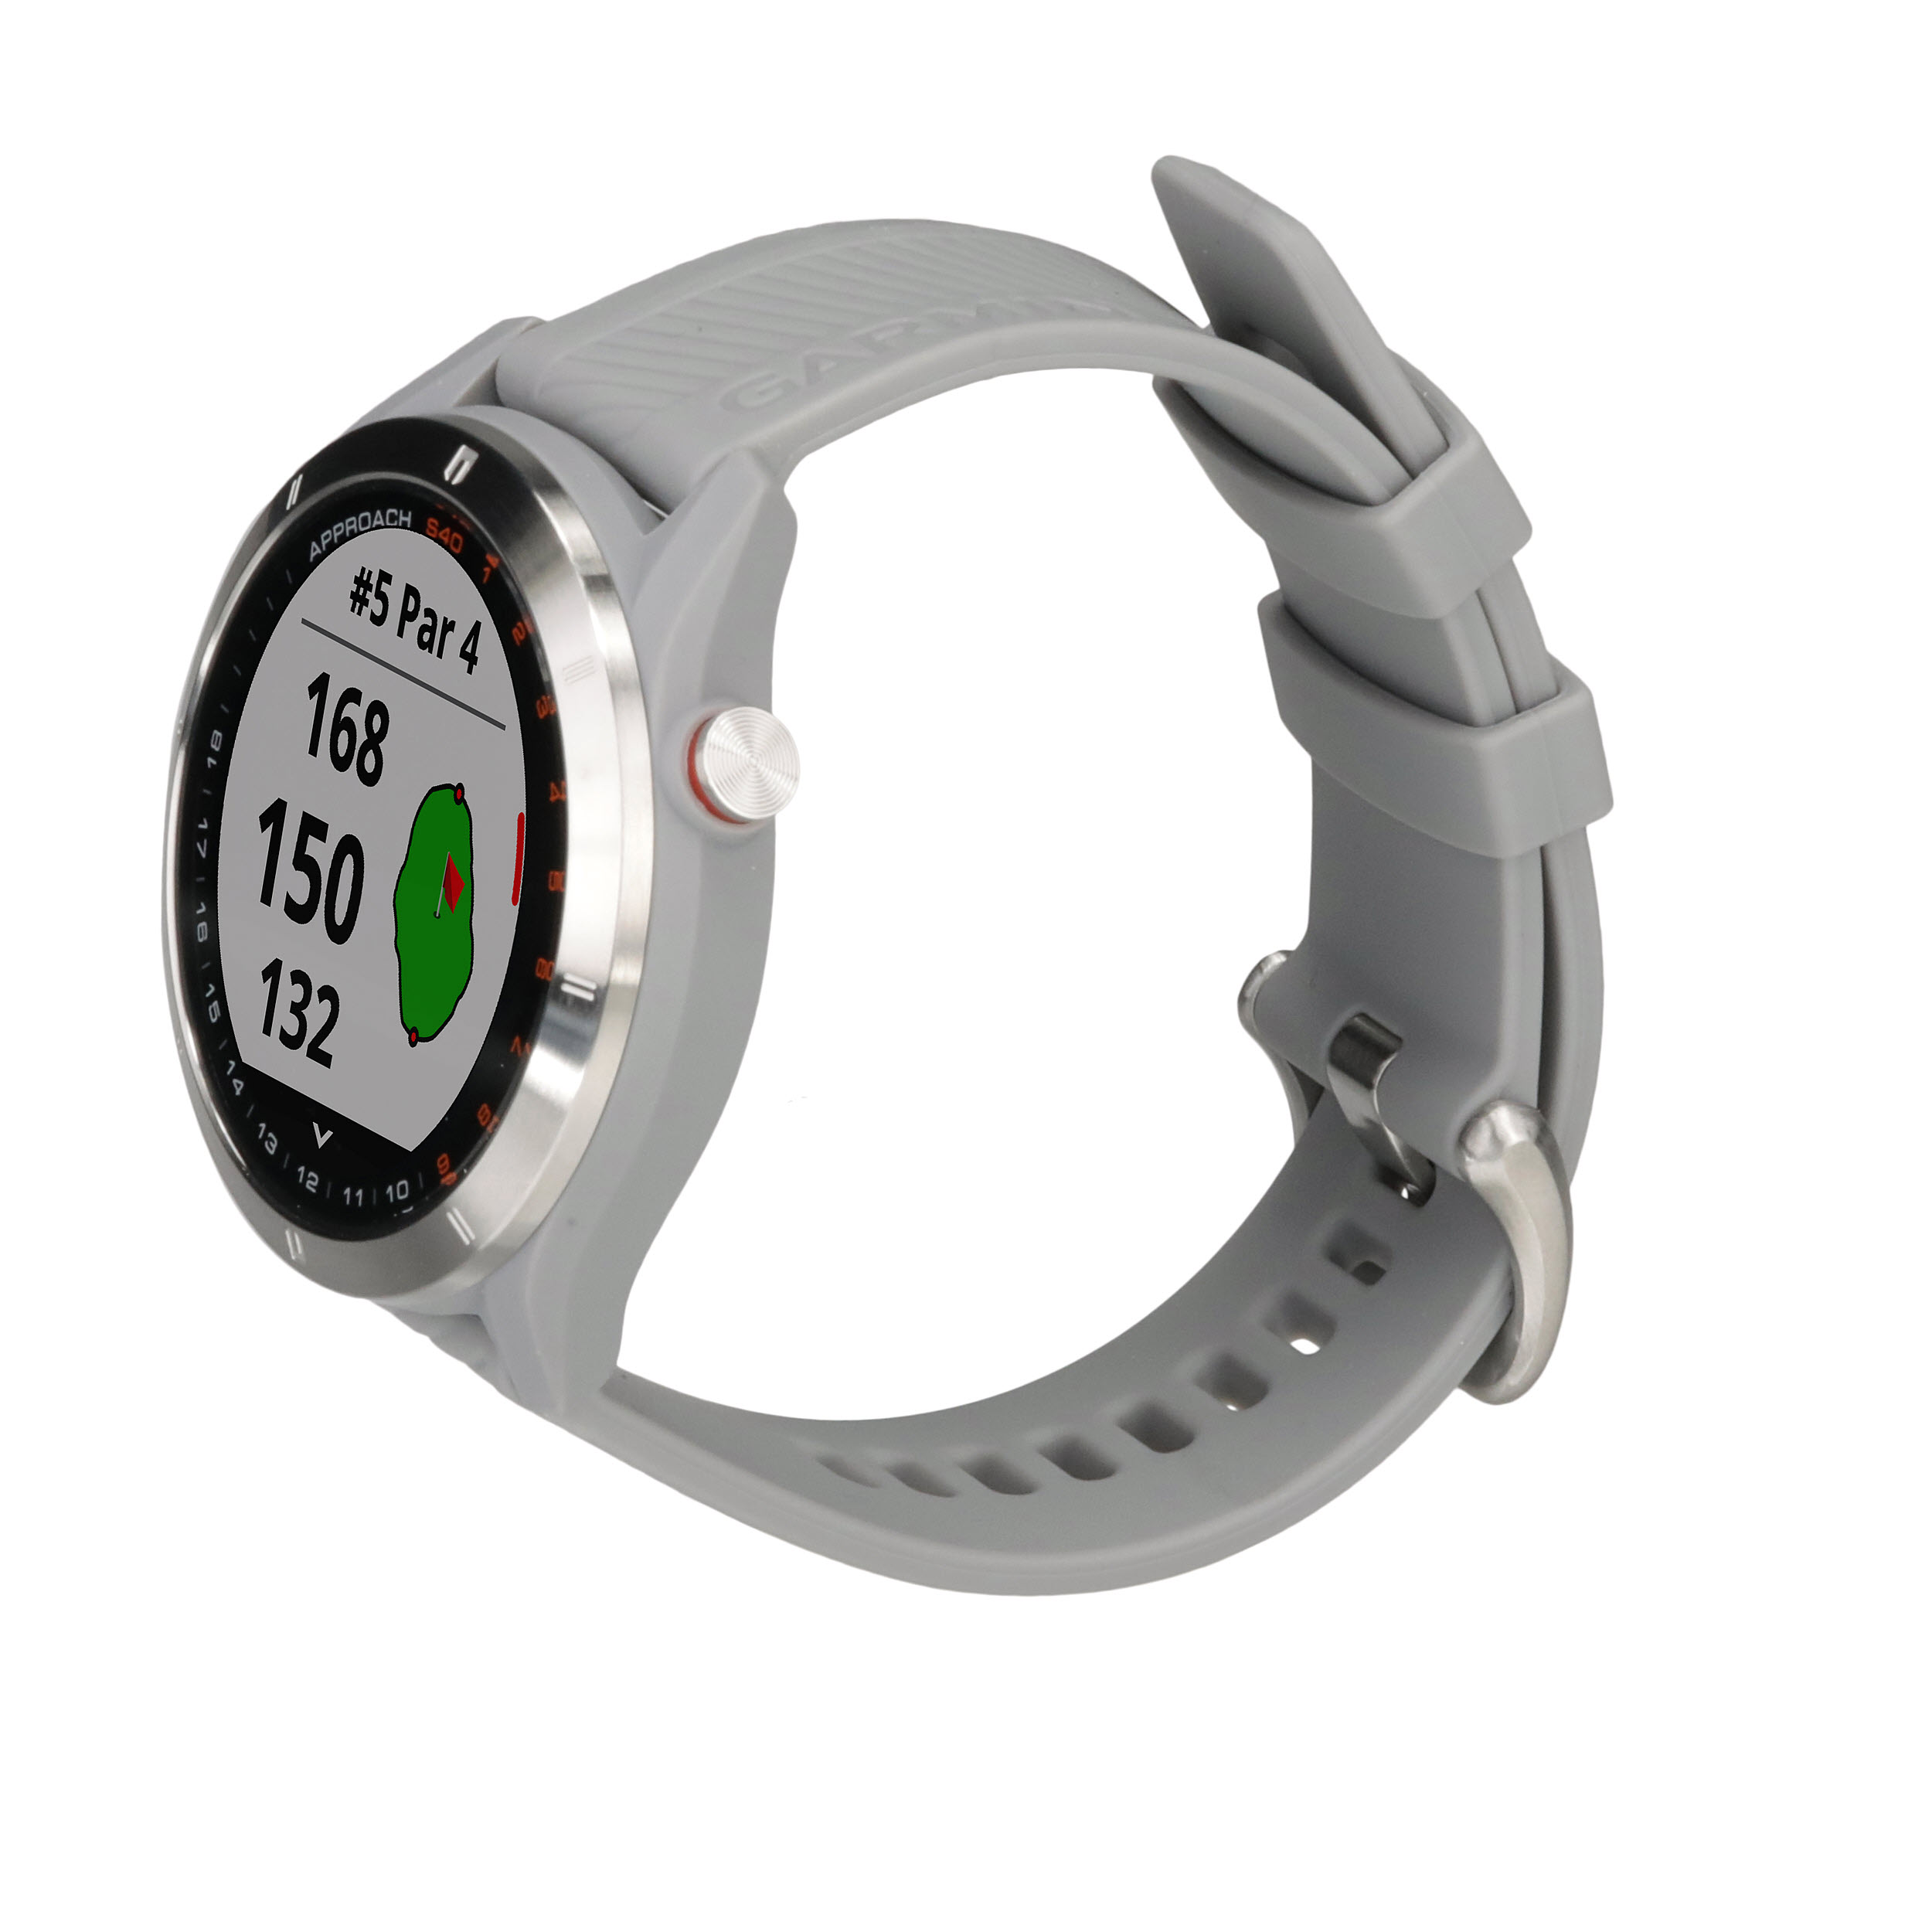 Garmin Approach S40 GPS Golf Smartwatch in Gray - Walmart.com